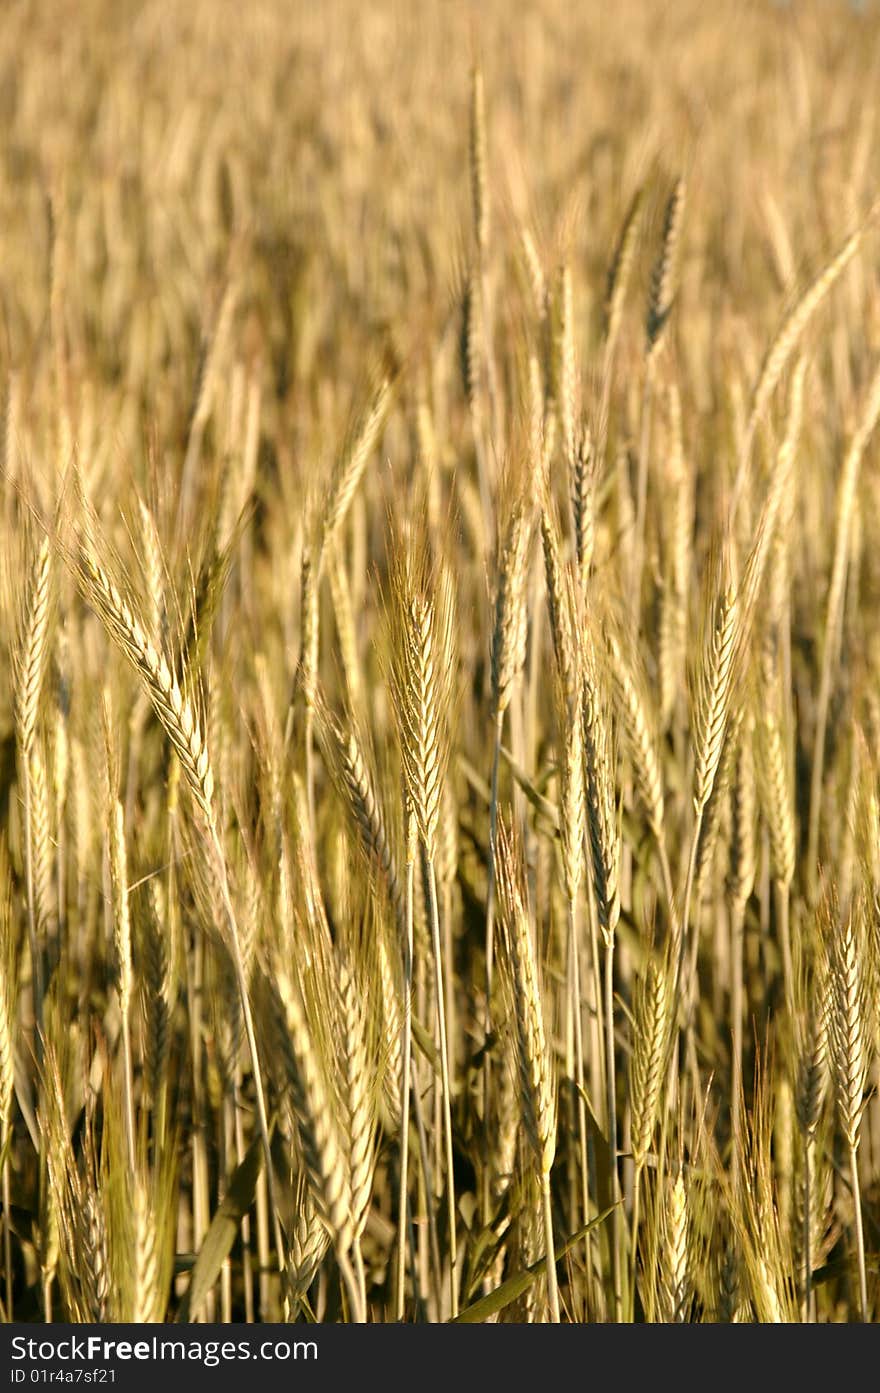 Wheat field , grain field textures. Wheat field , grain field textures